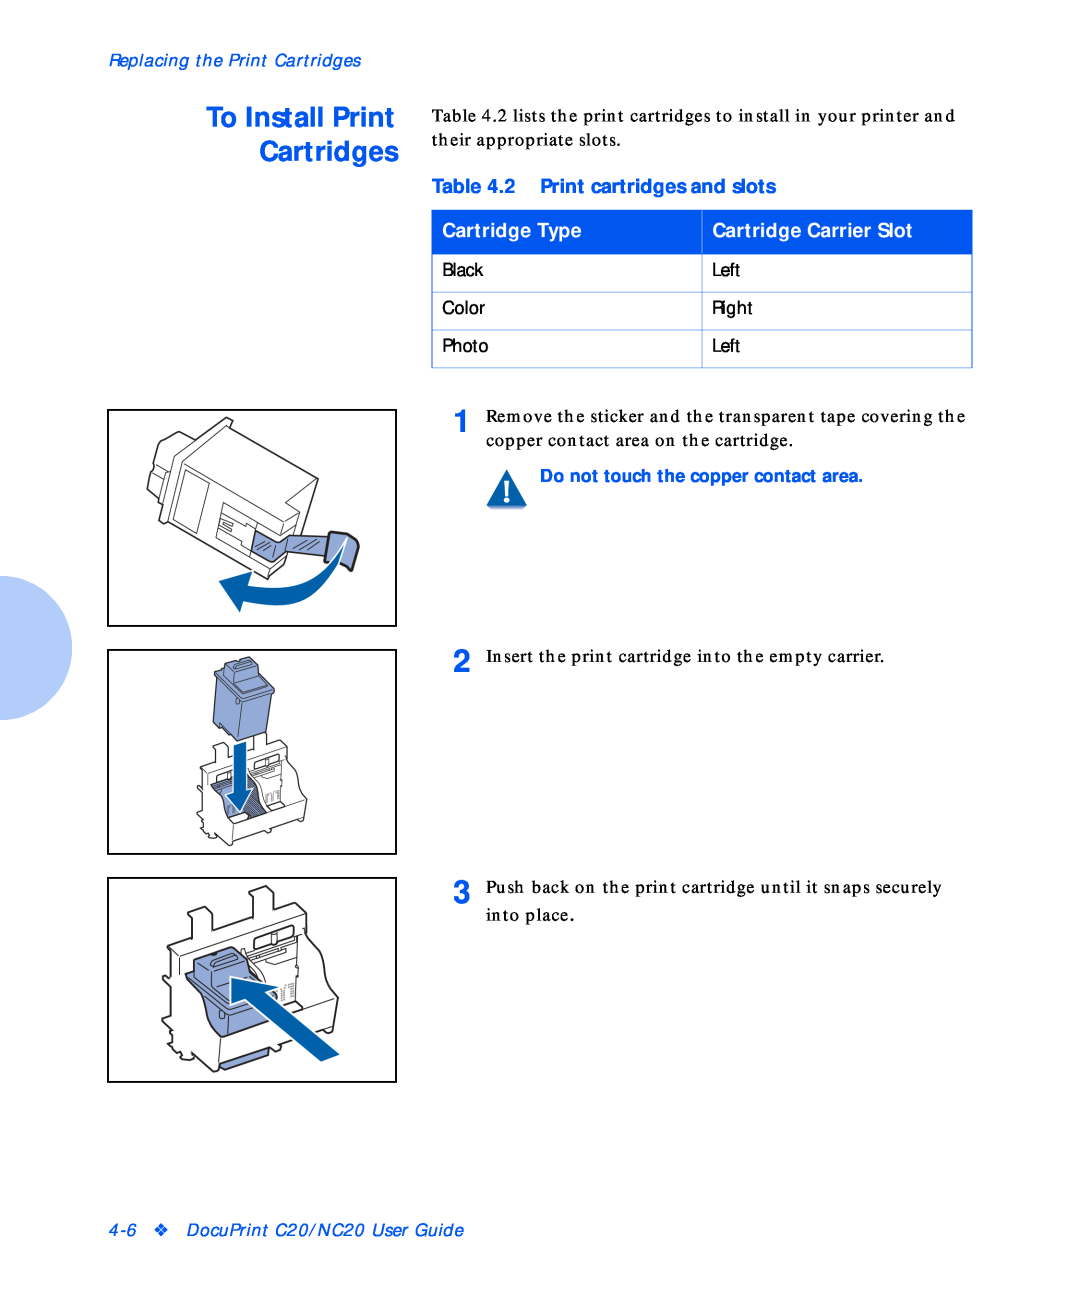 Xerox NC20 manual To Install Print Cartridges, 2 Print cartridges and slots, Cartridge Type, Cartridge Carrier Slot 